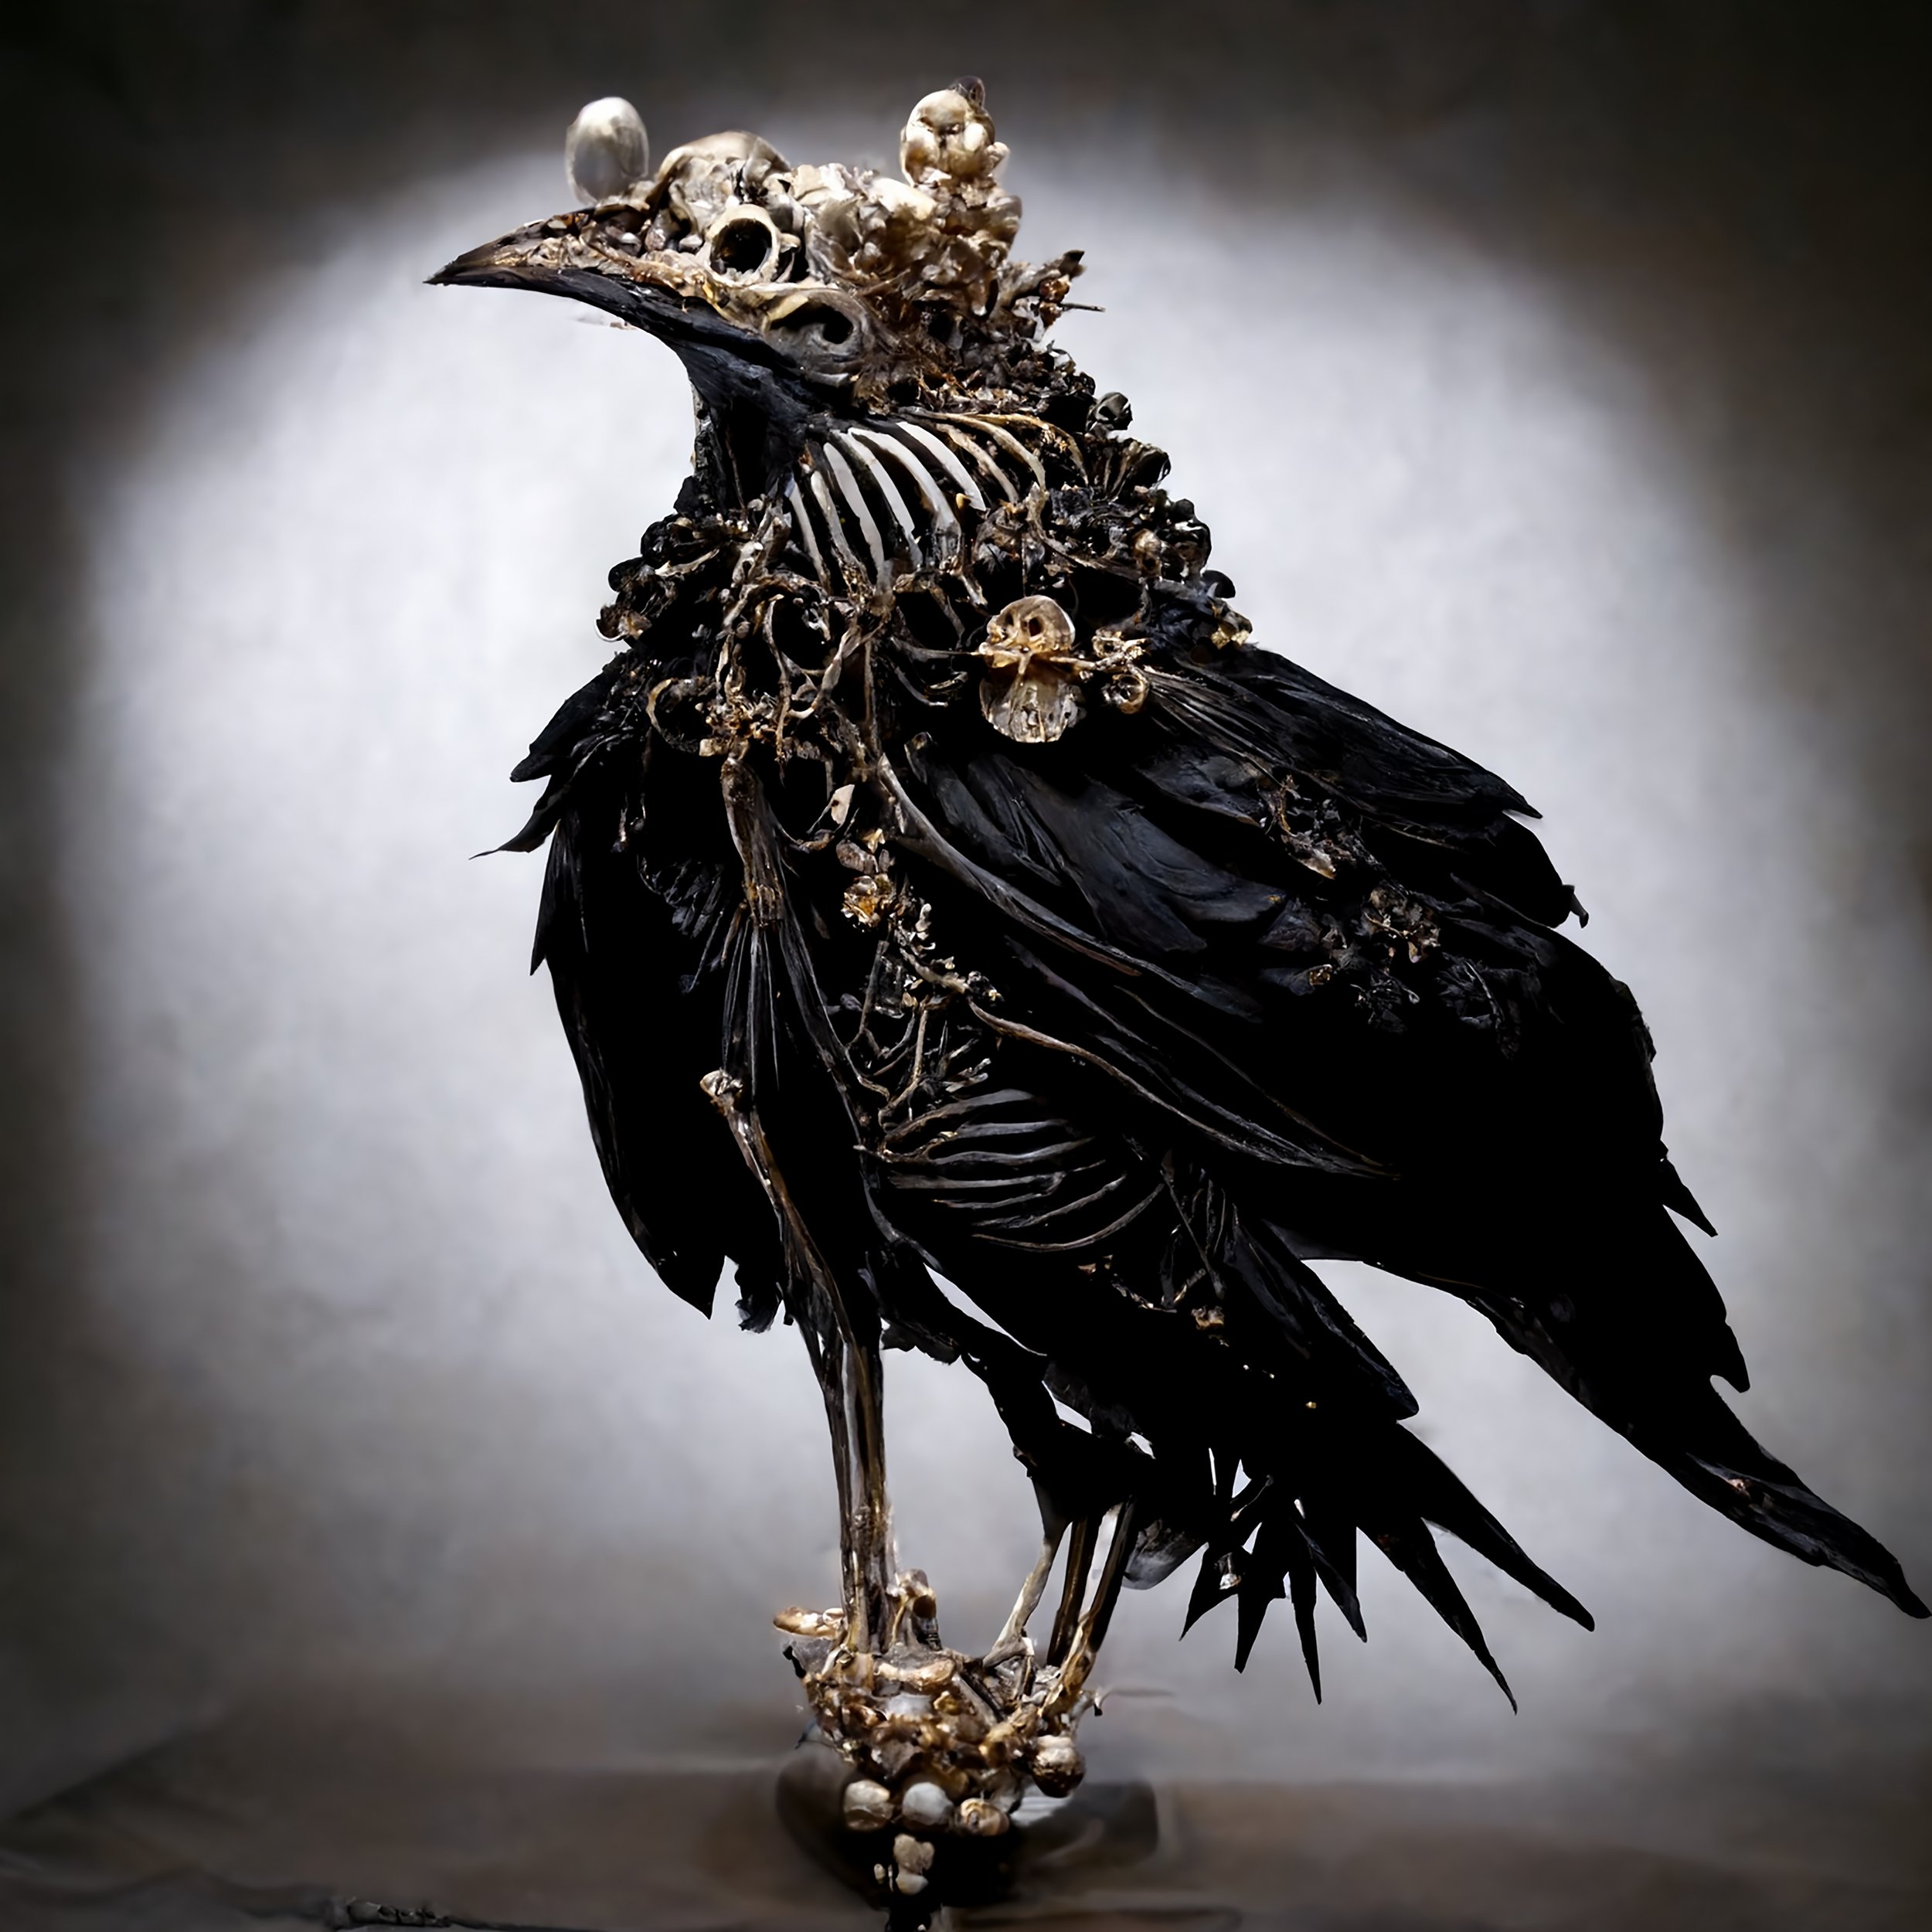 BrilliantImages_black_raven_skeleton_with_silver_crown_pearls_55c91525-ac5d-4b07-abc1-b841e730491d copy.jpg